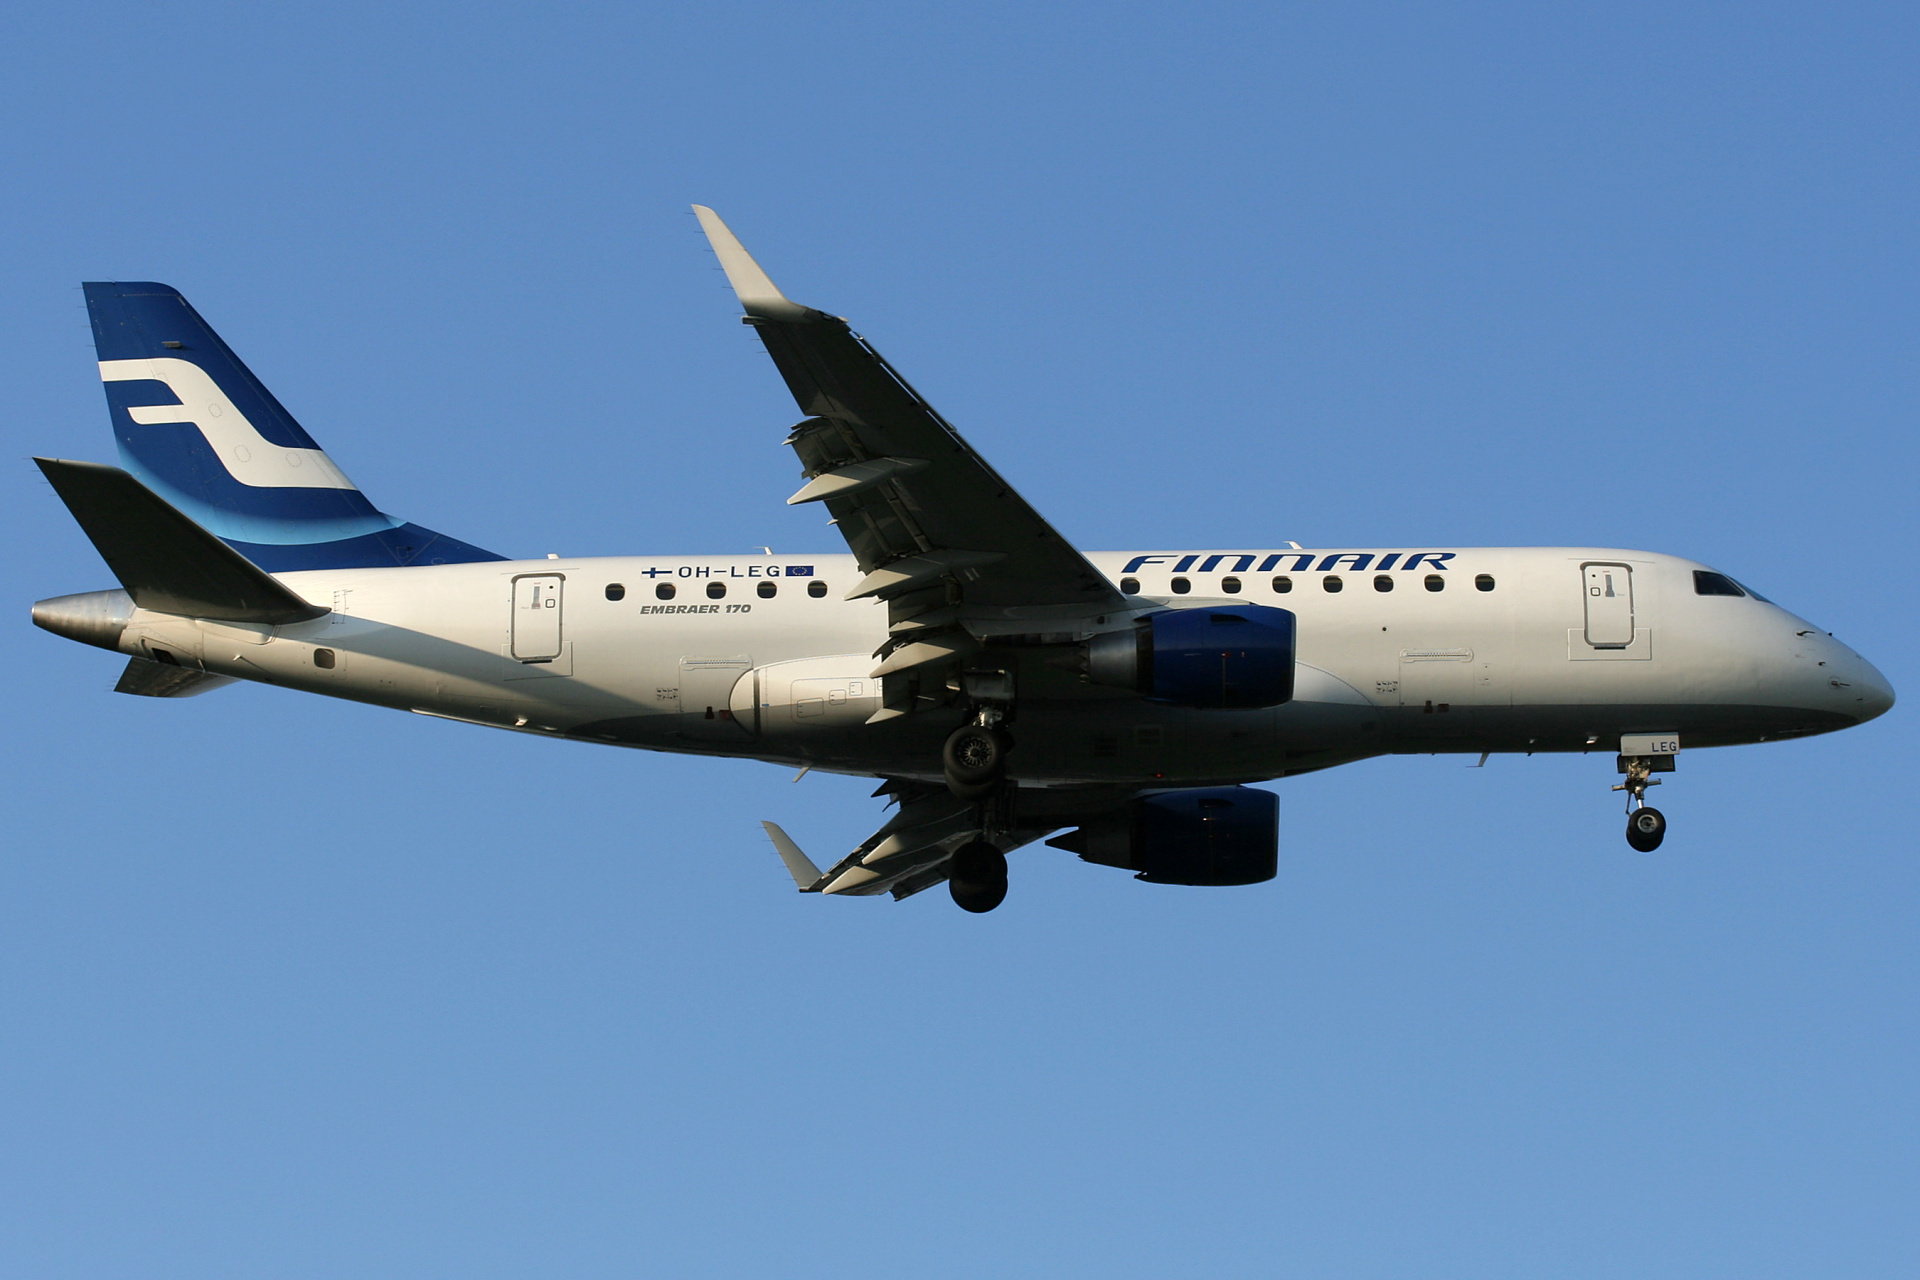 OH-LEG (Aircraft » EPWA Spotting » Embraer E170 » Finnair)